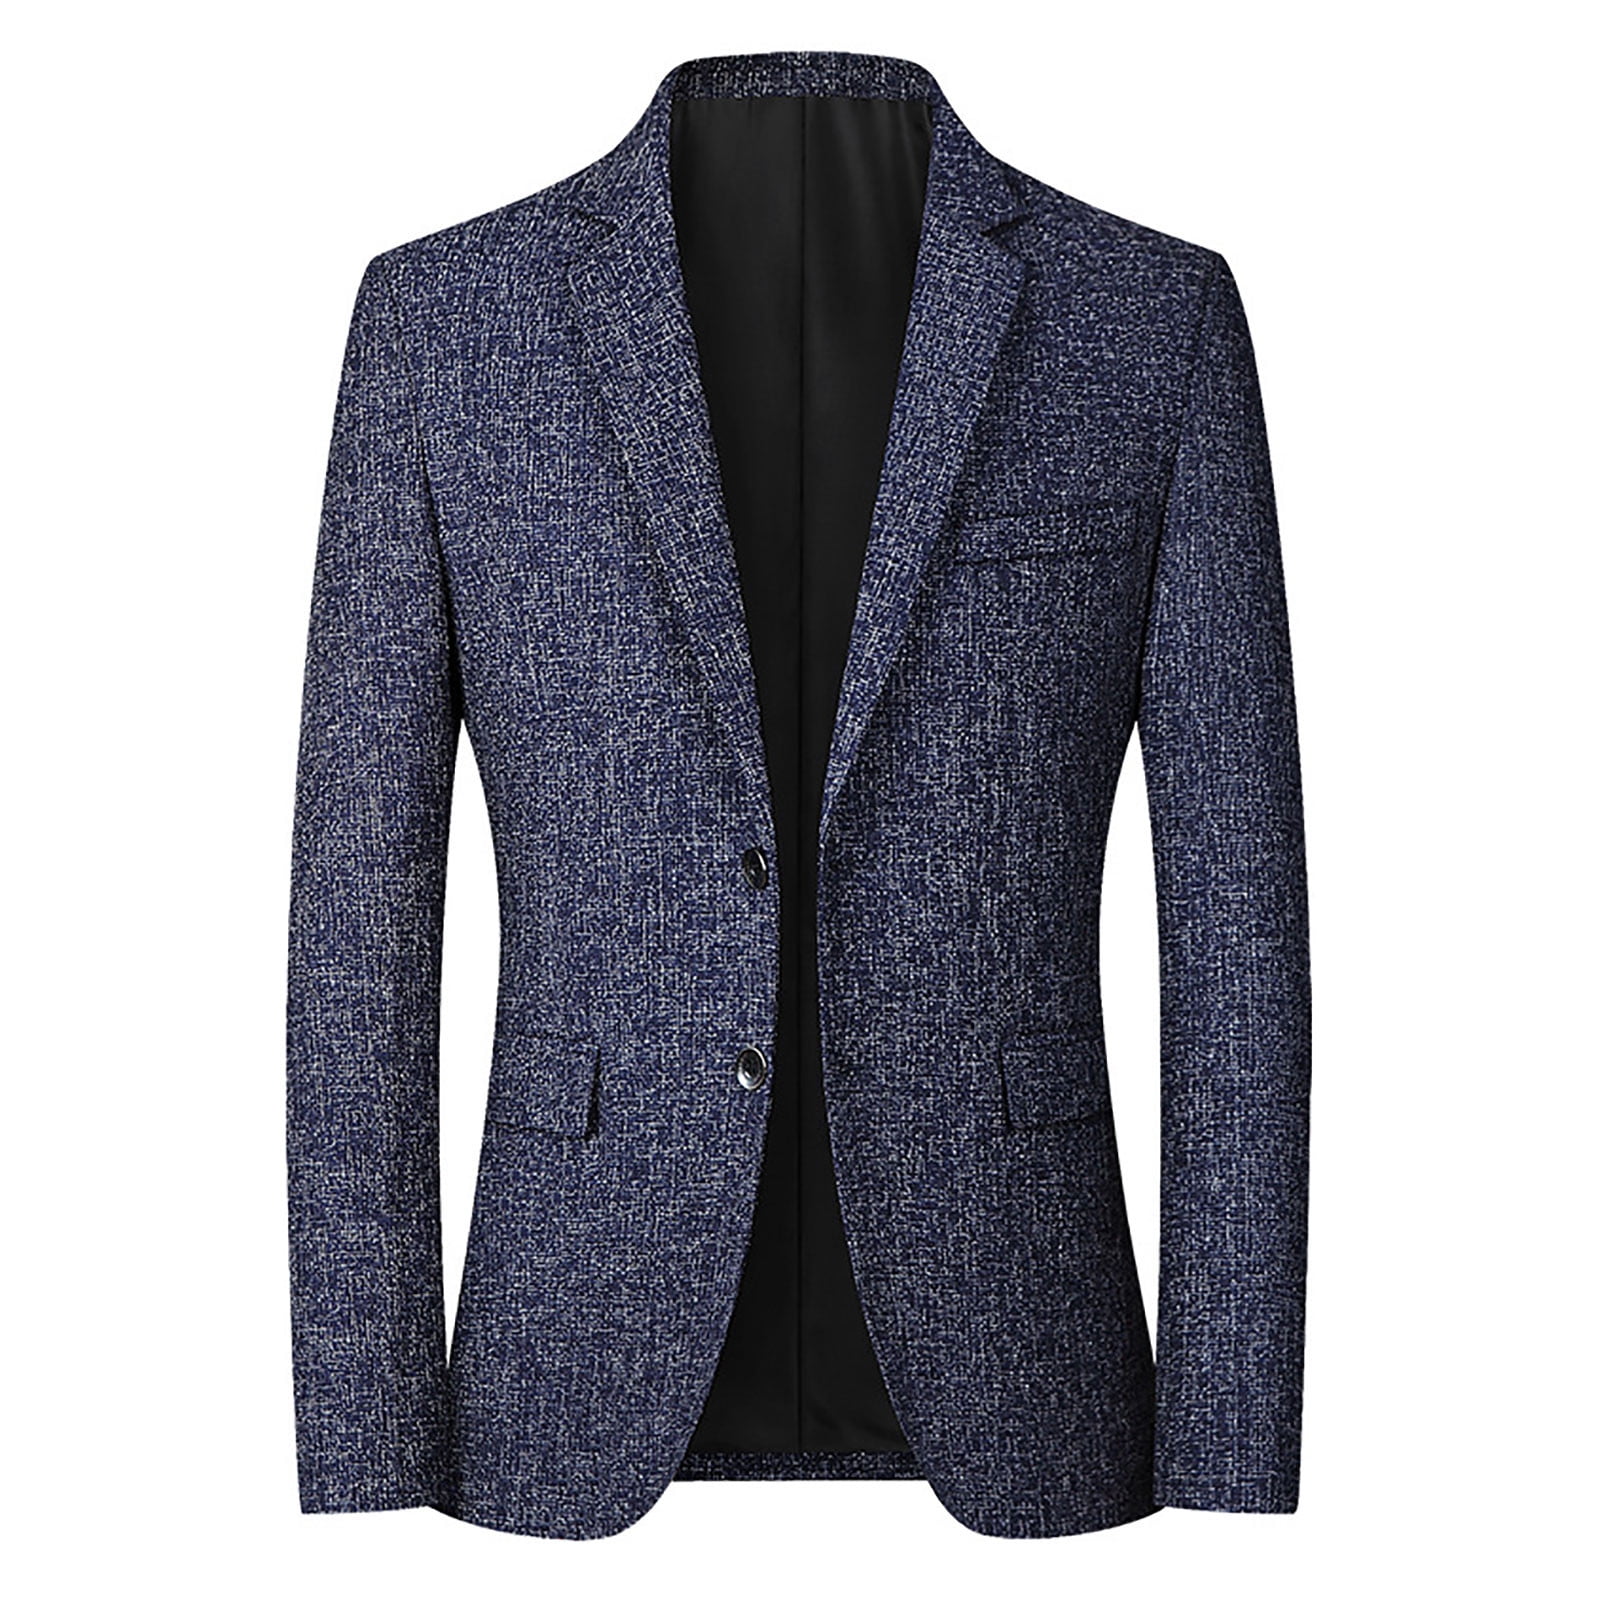 Odeerbi Blazer Jackets for Men Office Work Suit Casual Single-breasted Business Suit Wool Coat Black - Walmart.com